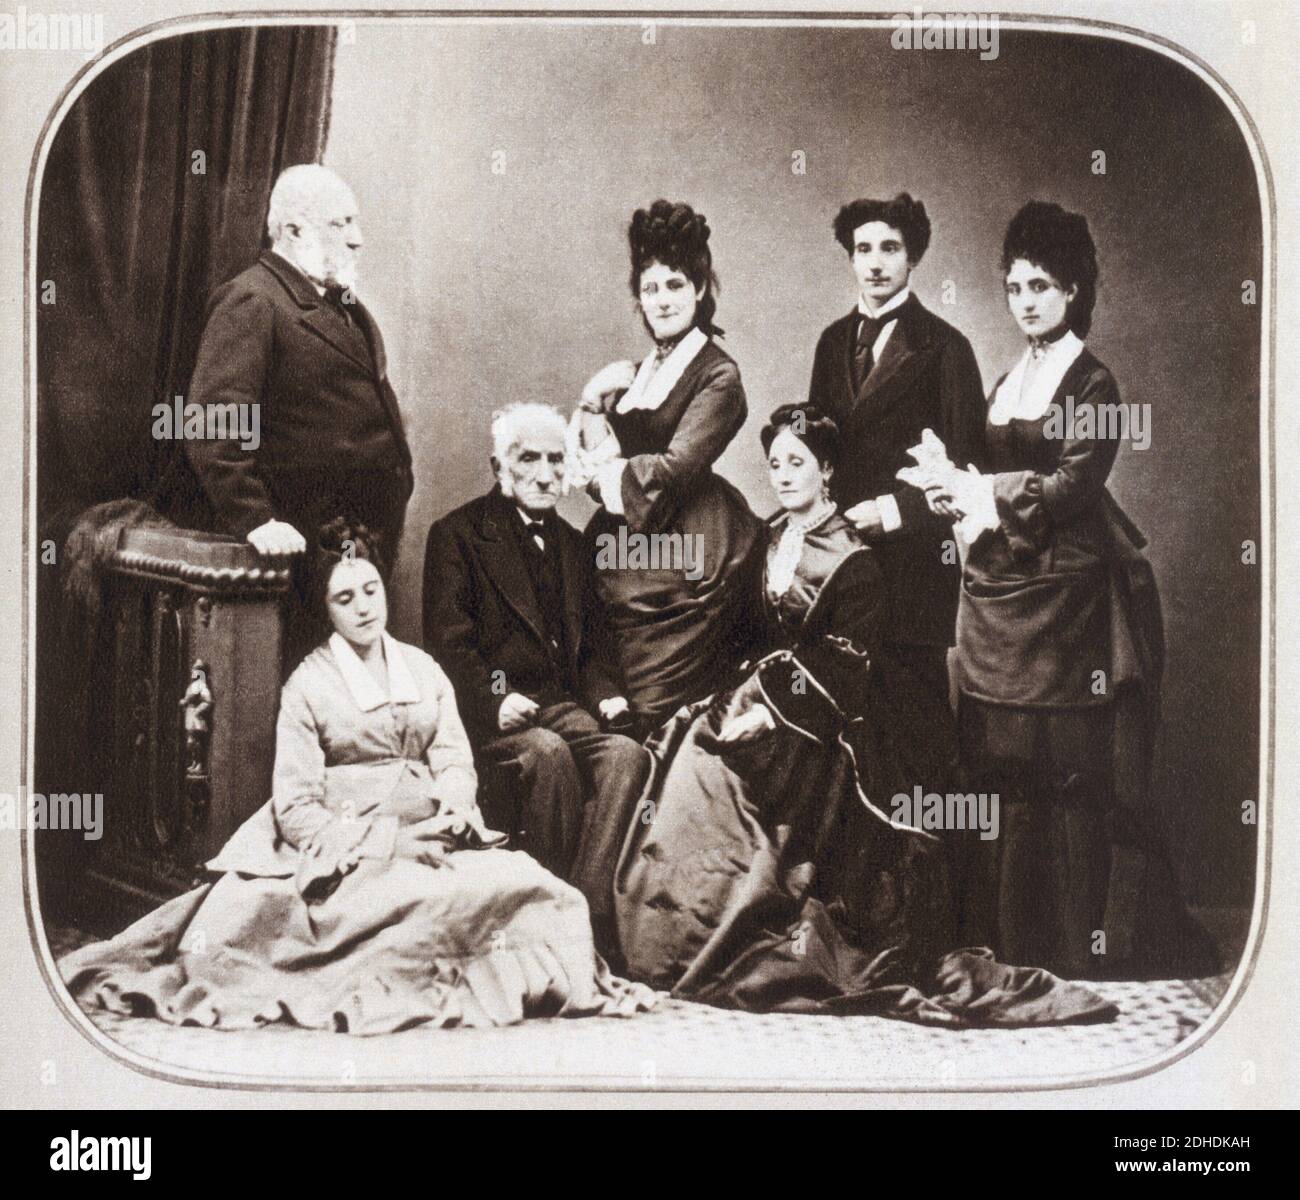 1872 , ITALIEN : der berühmteste italienische Schriftsteller ALESSANDRO MANZONI ( 1785 - 1873 ) , Autor des Buches " I Promessi Sposi " ( 1827 - 1842 ) mit Sohn PIETRO ( 1813 - 1873 ) mit Frau G. Visconti und ihre 4 Söhne : Vittoria ( geboren 1846 ) , Giulia ( geboren 1848 ) , Renzo ( geboren 1852 ) und Alessandra ( geboren 1854 ) - SCRITTORE - LETTERATO - FAMIGLIA - FAMILIE - LETTERATURA - LITERATUR - Portrait - ritratto - alter alter alter Mann - uomo anziano vecchio - weiße Haare - capelli bianchi - favoriti - Basetta - Basette - FAMILIENGRUPPE - GRUPPO di FAMIGLIA - nonno - nipote - nipoti - Großvater - Enkel Stockfoto